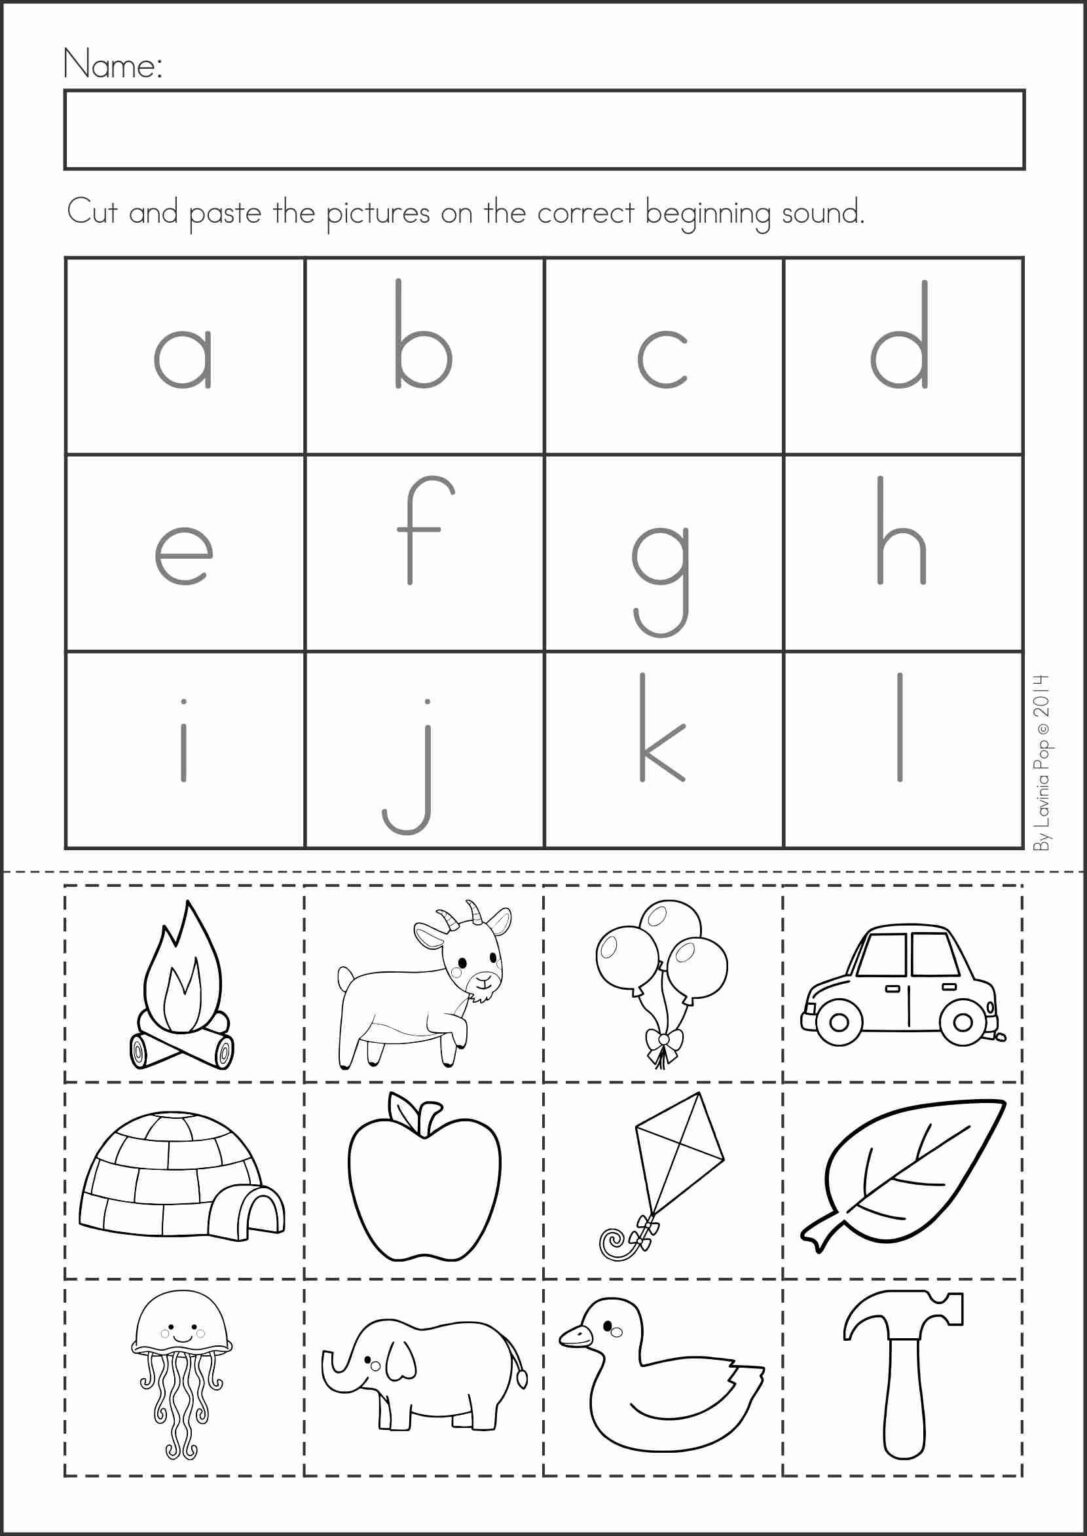 free-printable-kindergarten-worksheets-cut-and-paste-159-lyana-worksheets